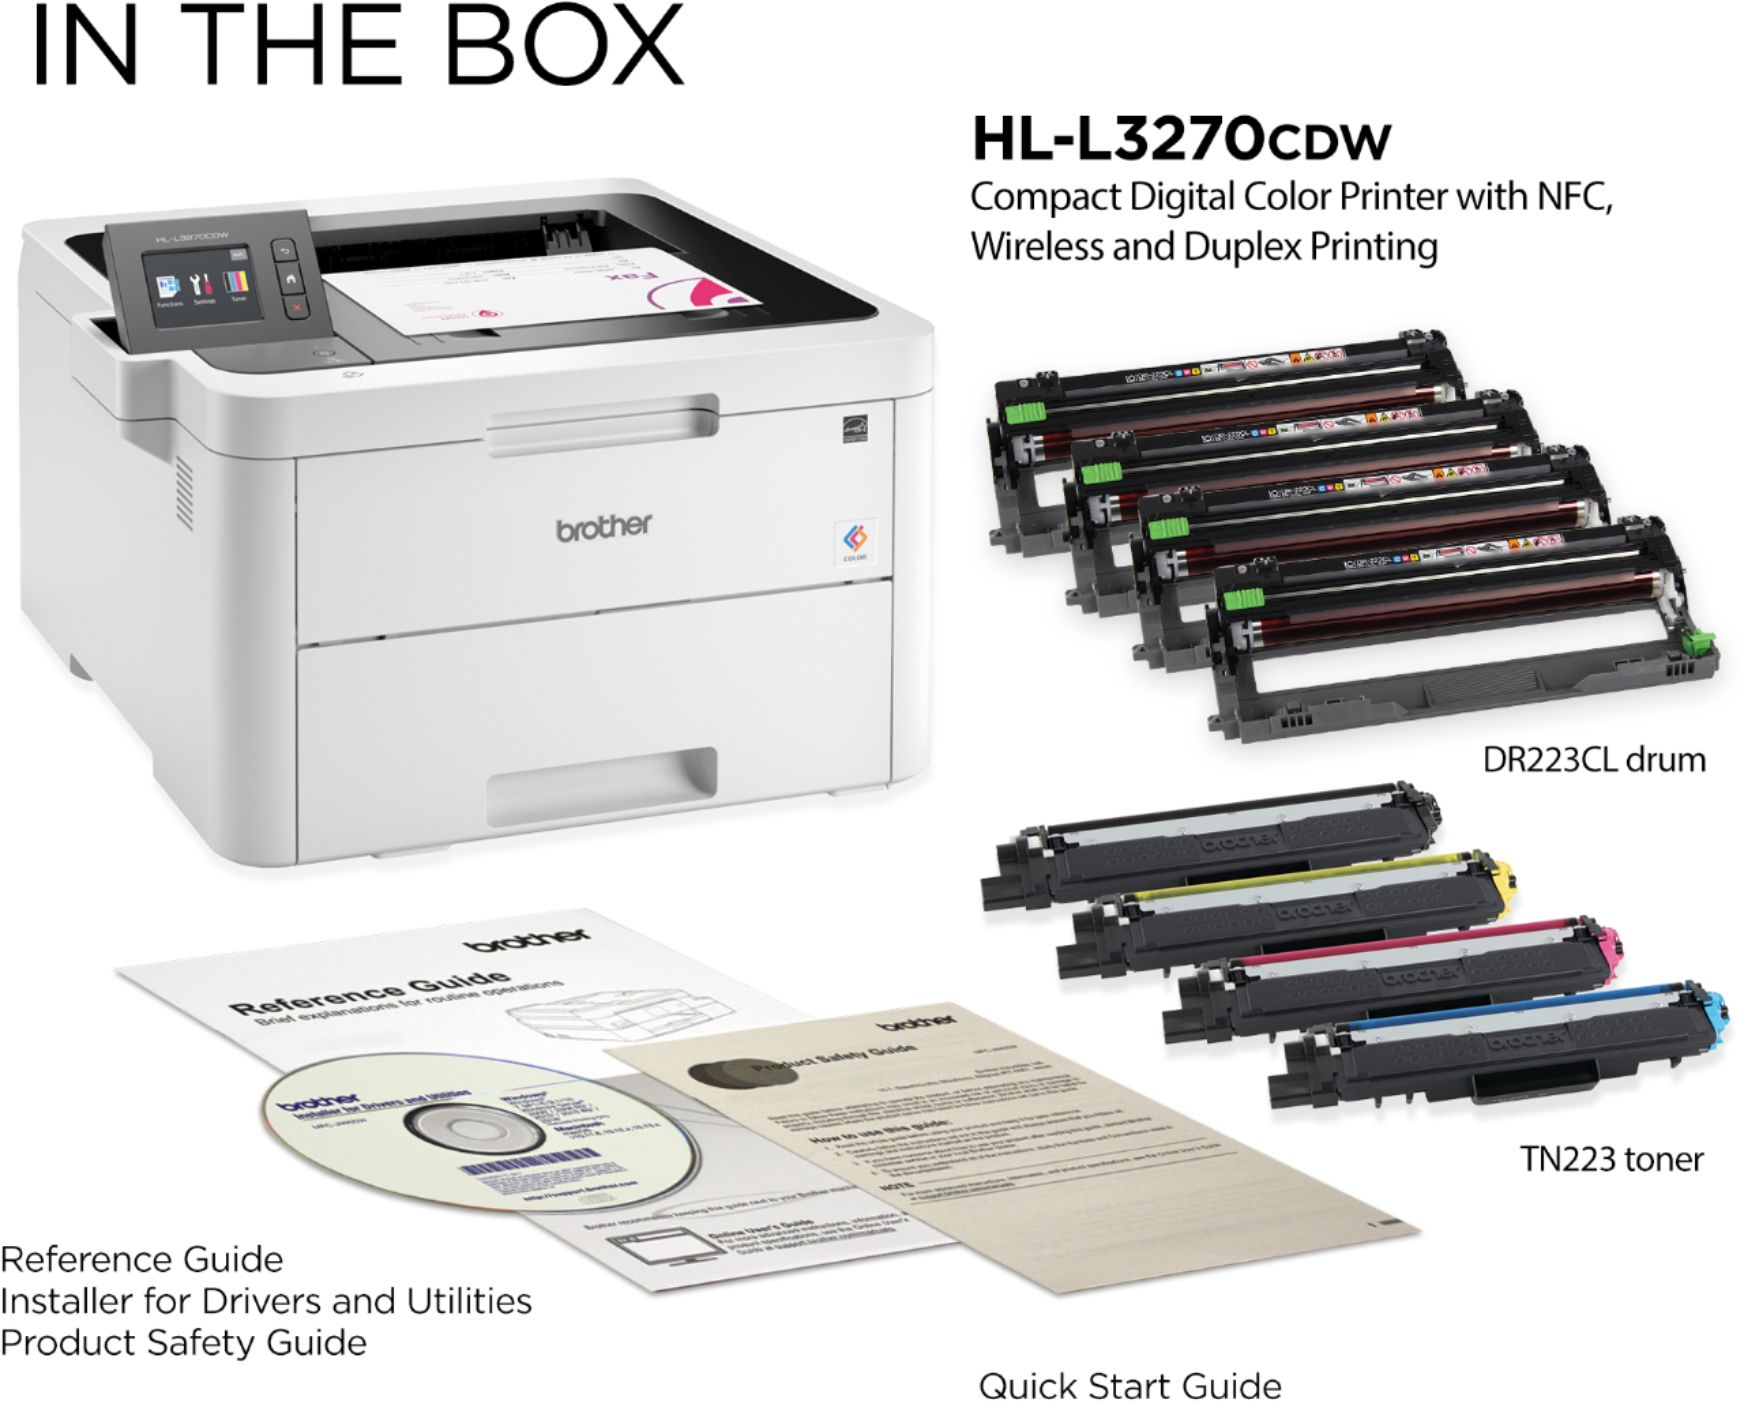 Brother HL-L3270CDW Wireless Color Laser Printer White HL-L3270CDW